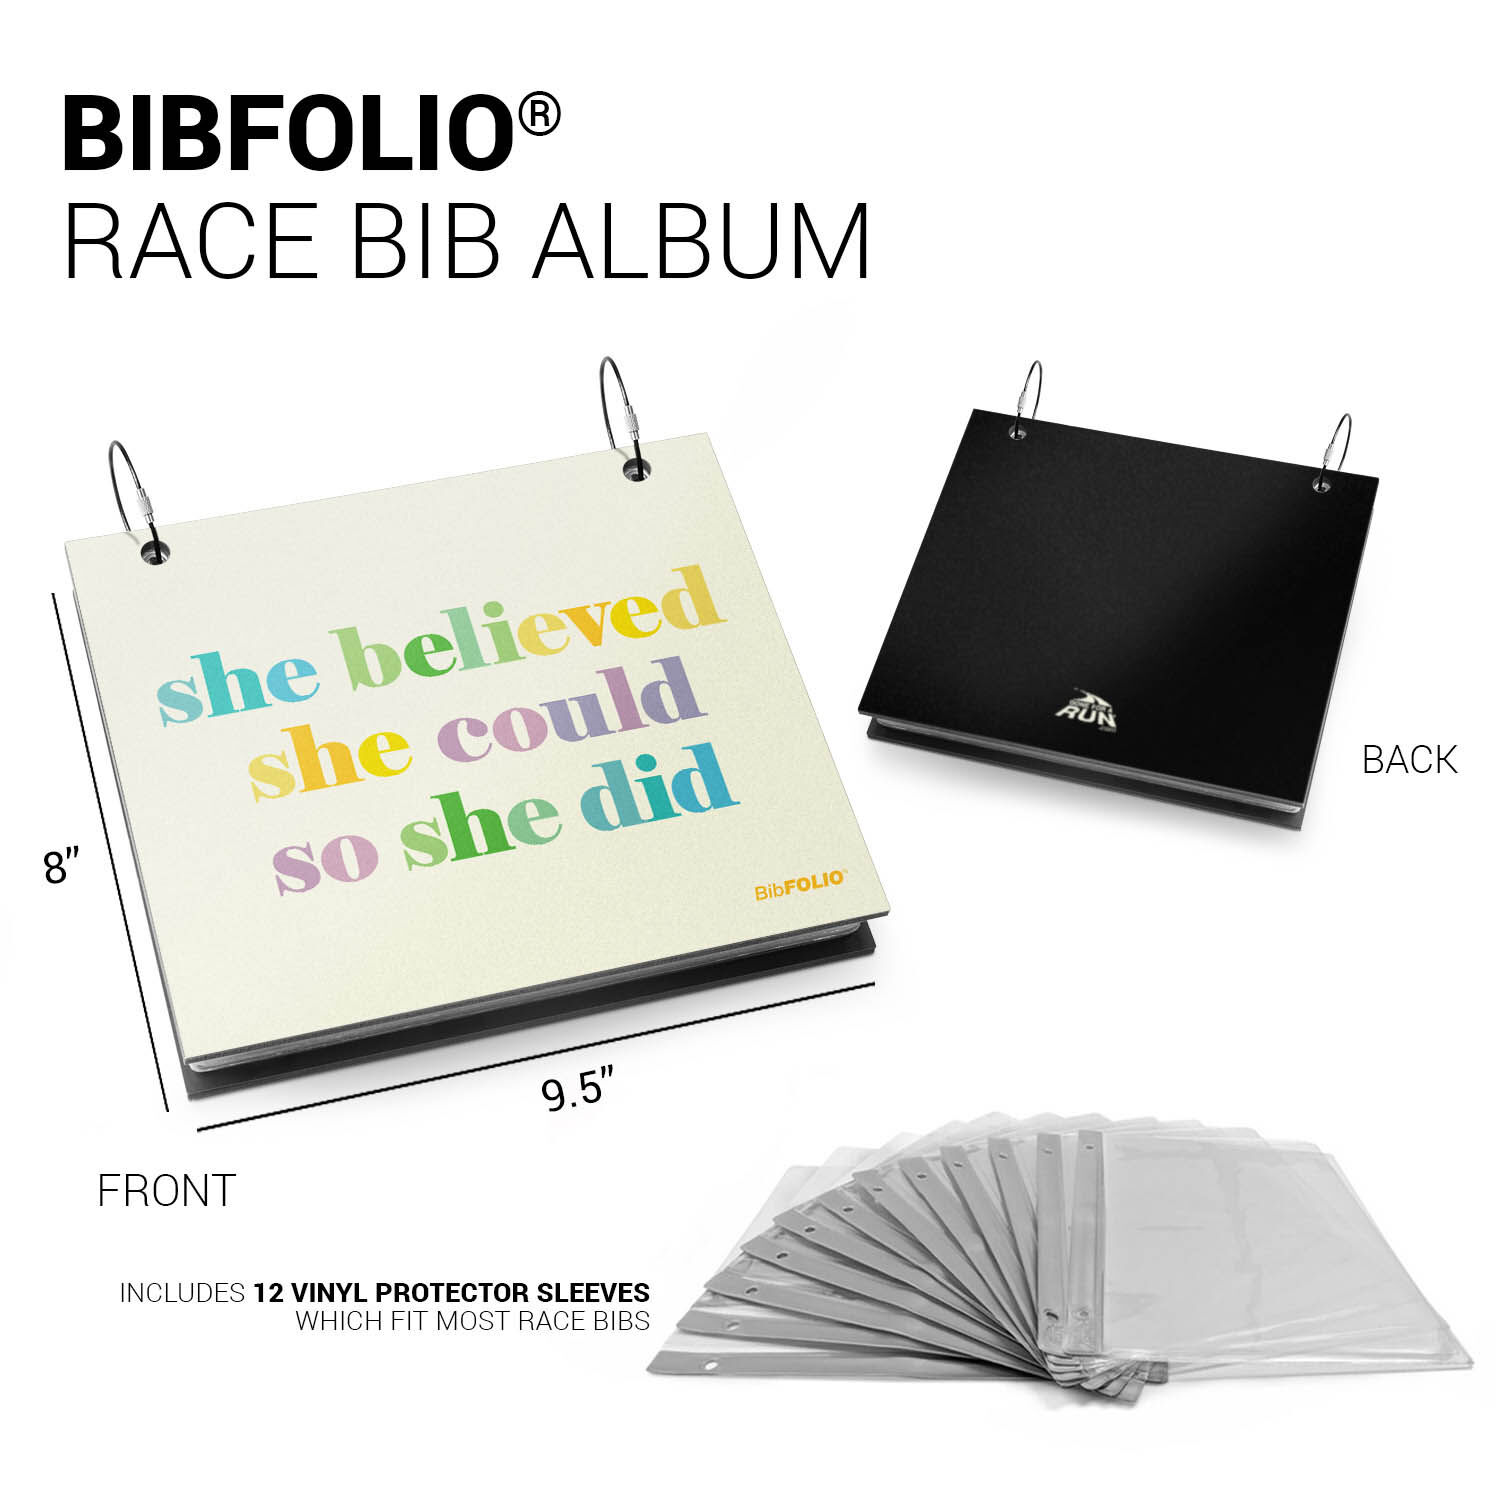 Gone For a Run BibFOLIO Race Bib Album She Believed She Could 